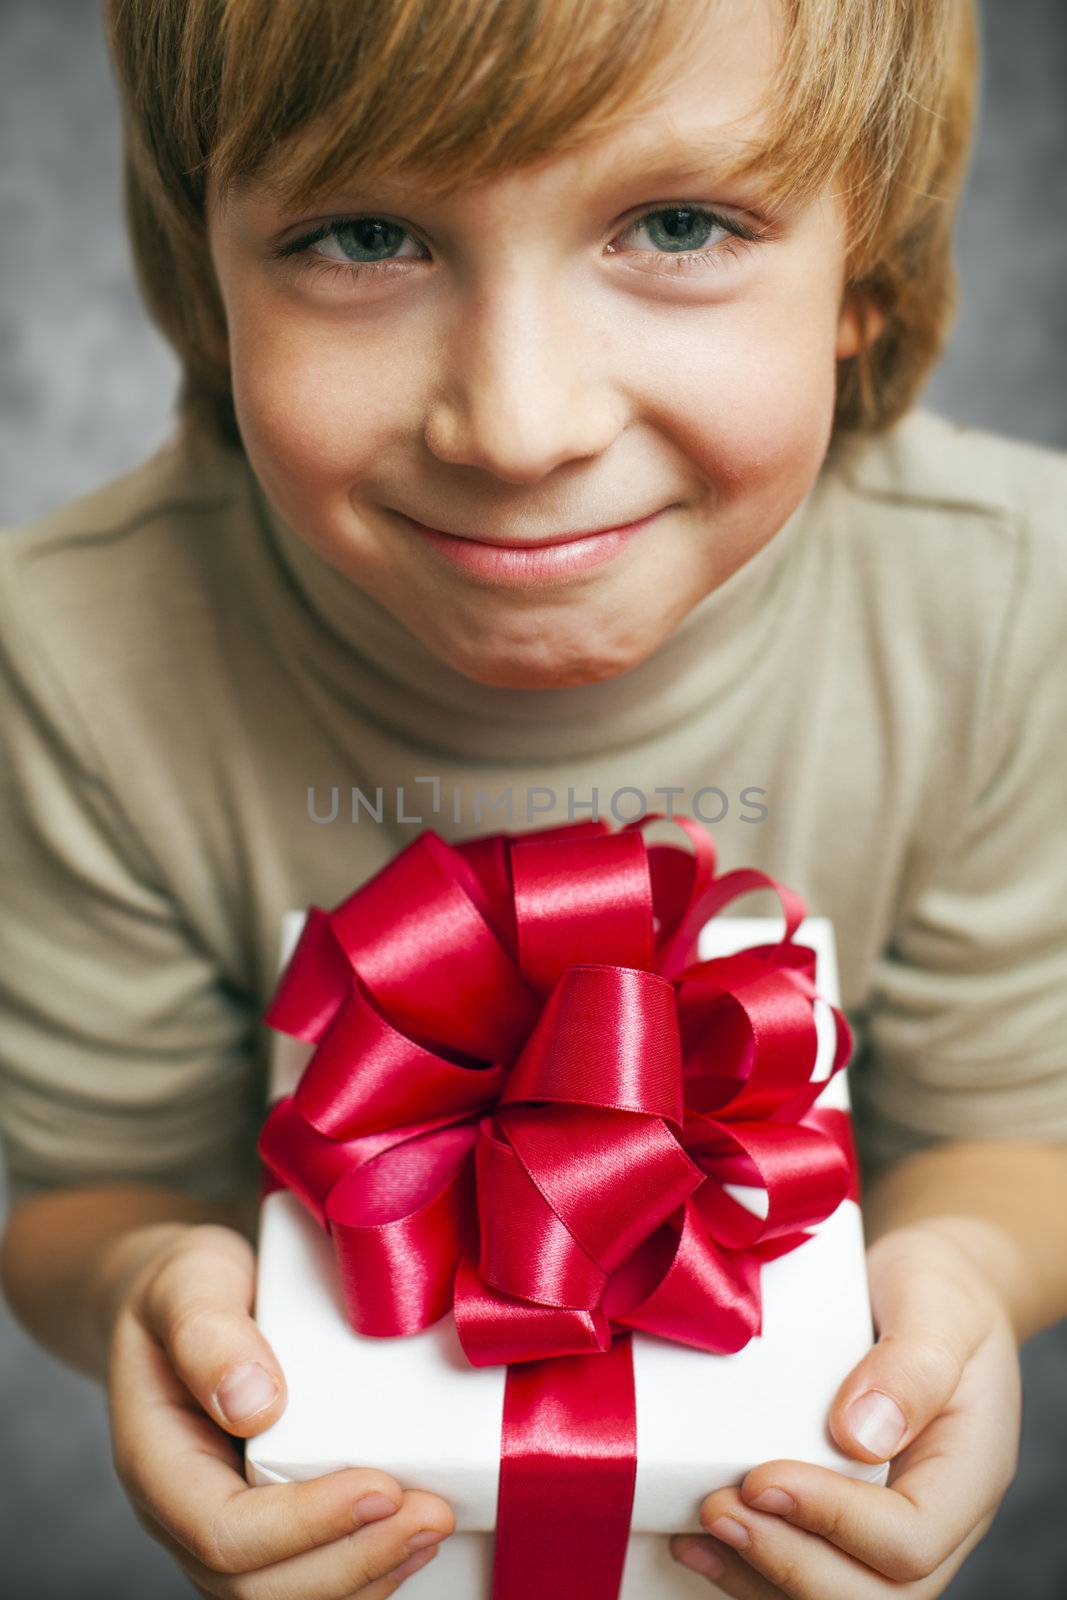 Boy holding present box by anelina